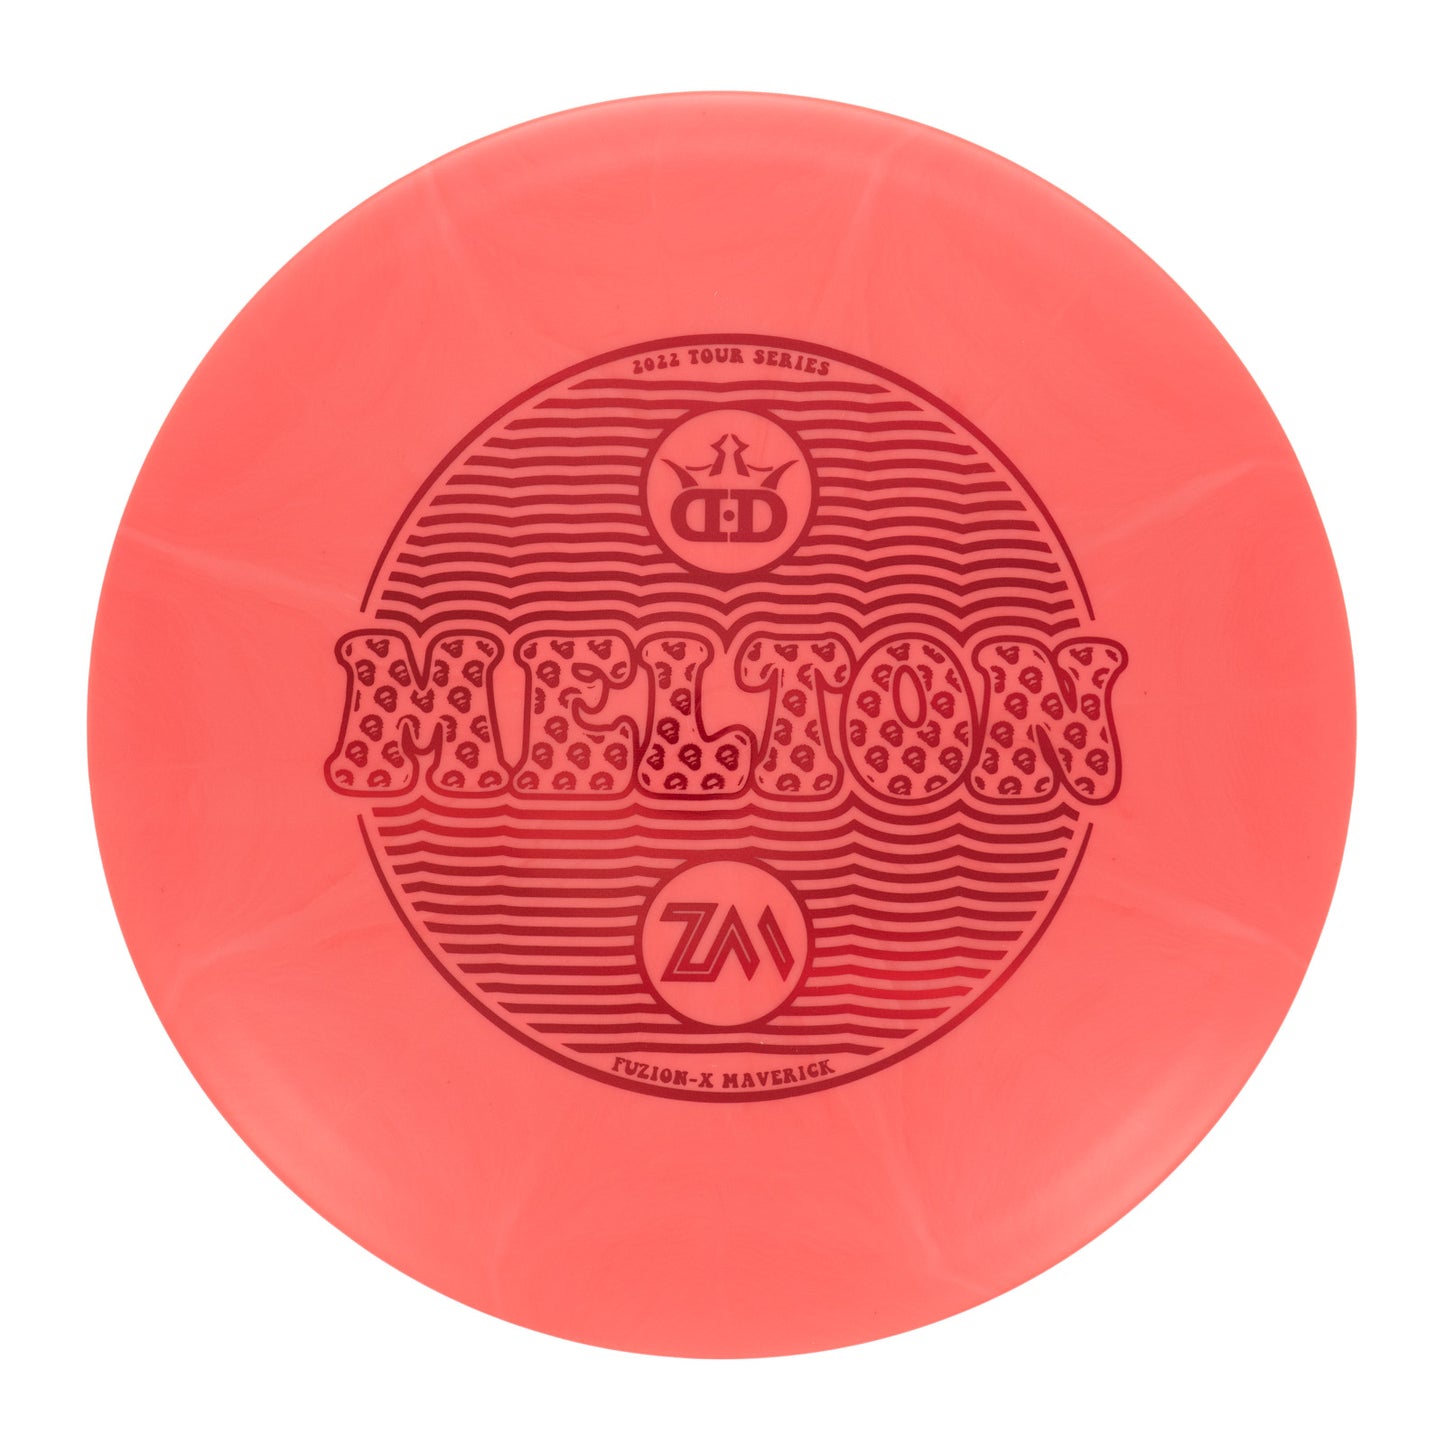 Dynamic Discs Maverick - Zach Melton 2022 Tour Series Fuzion-X 175g | Style 0002